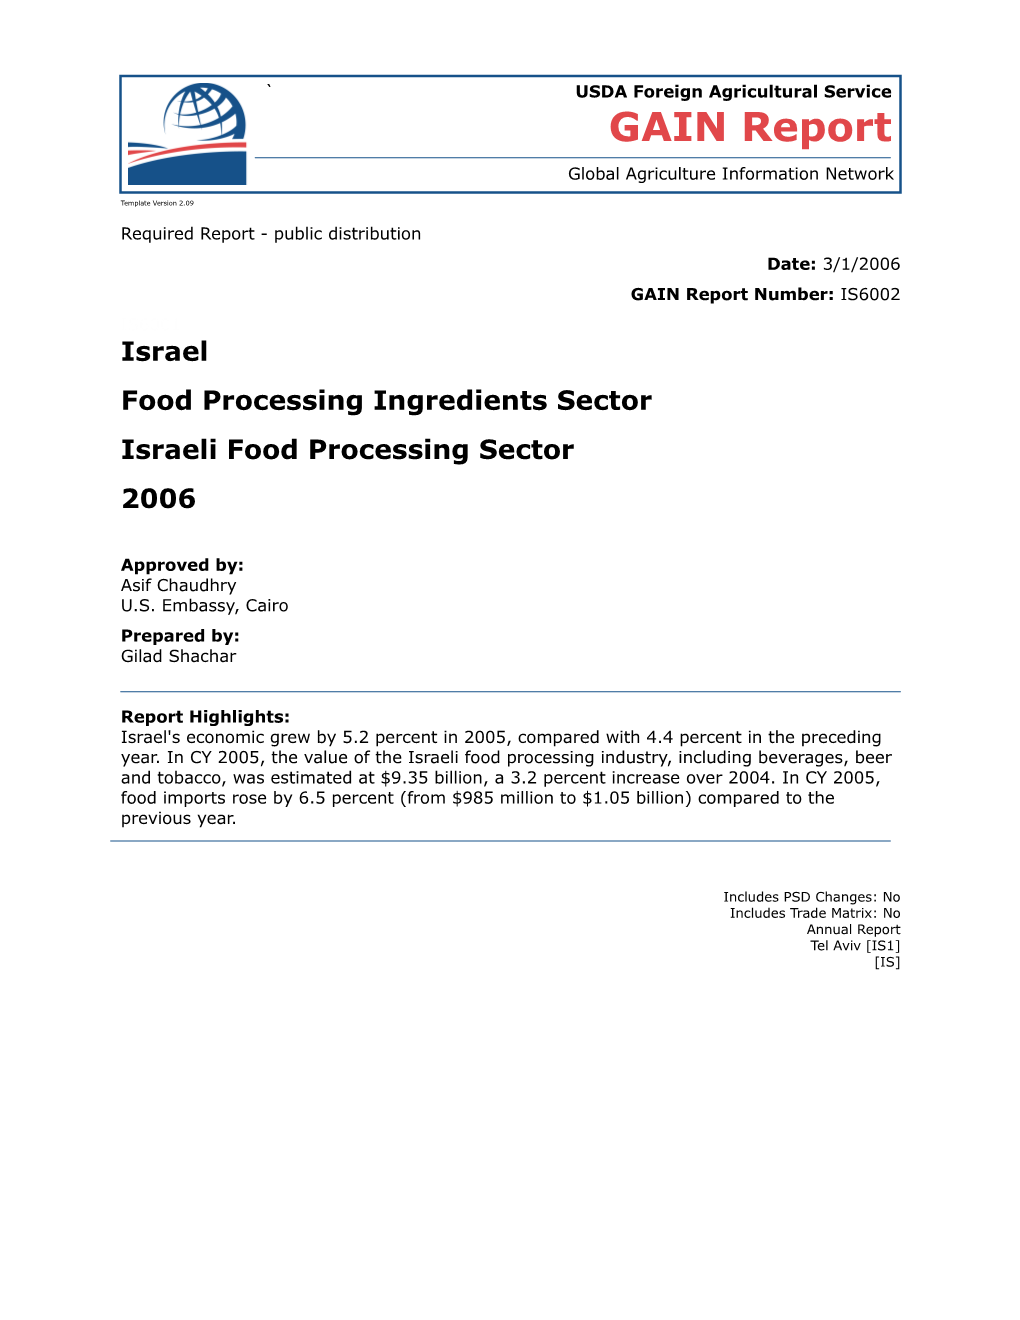 Israeli Food Processing Sector 2006